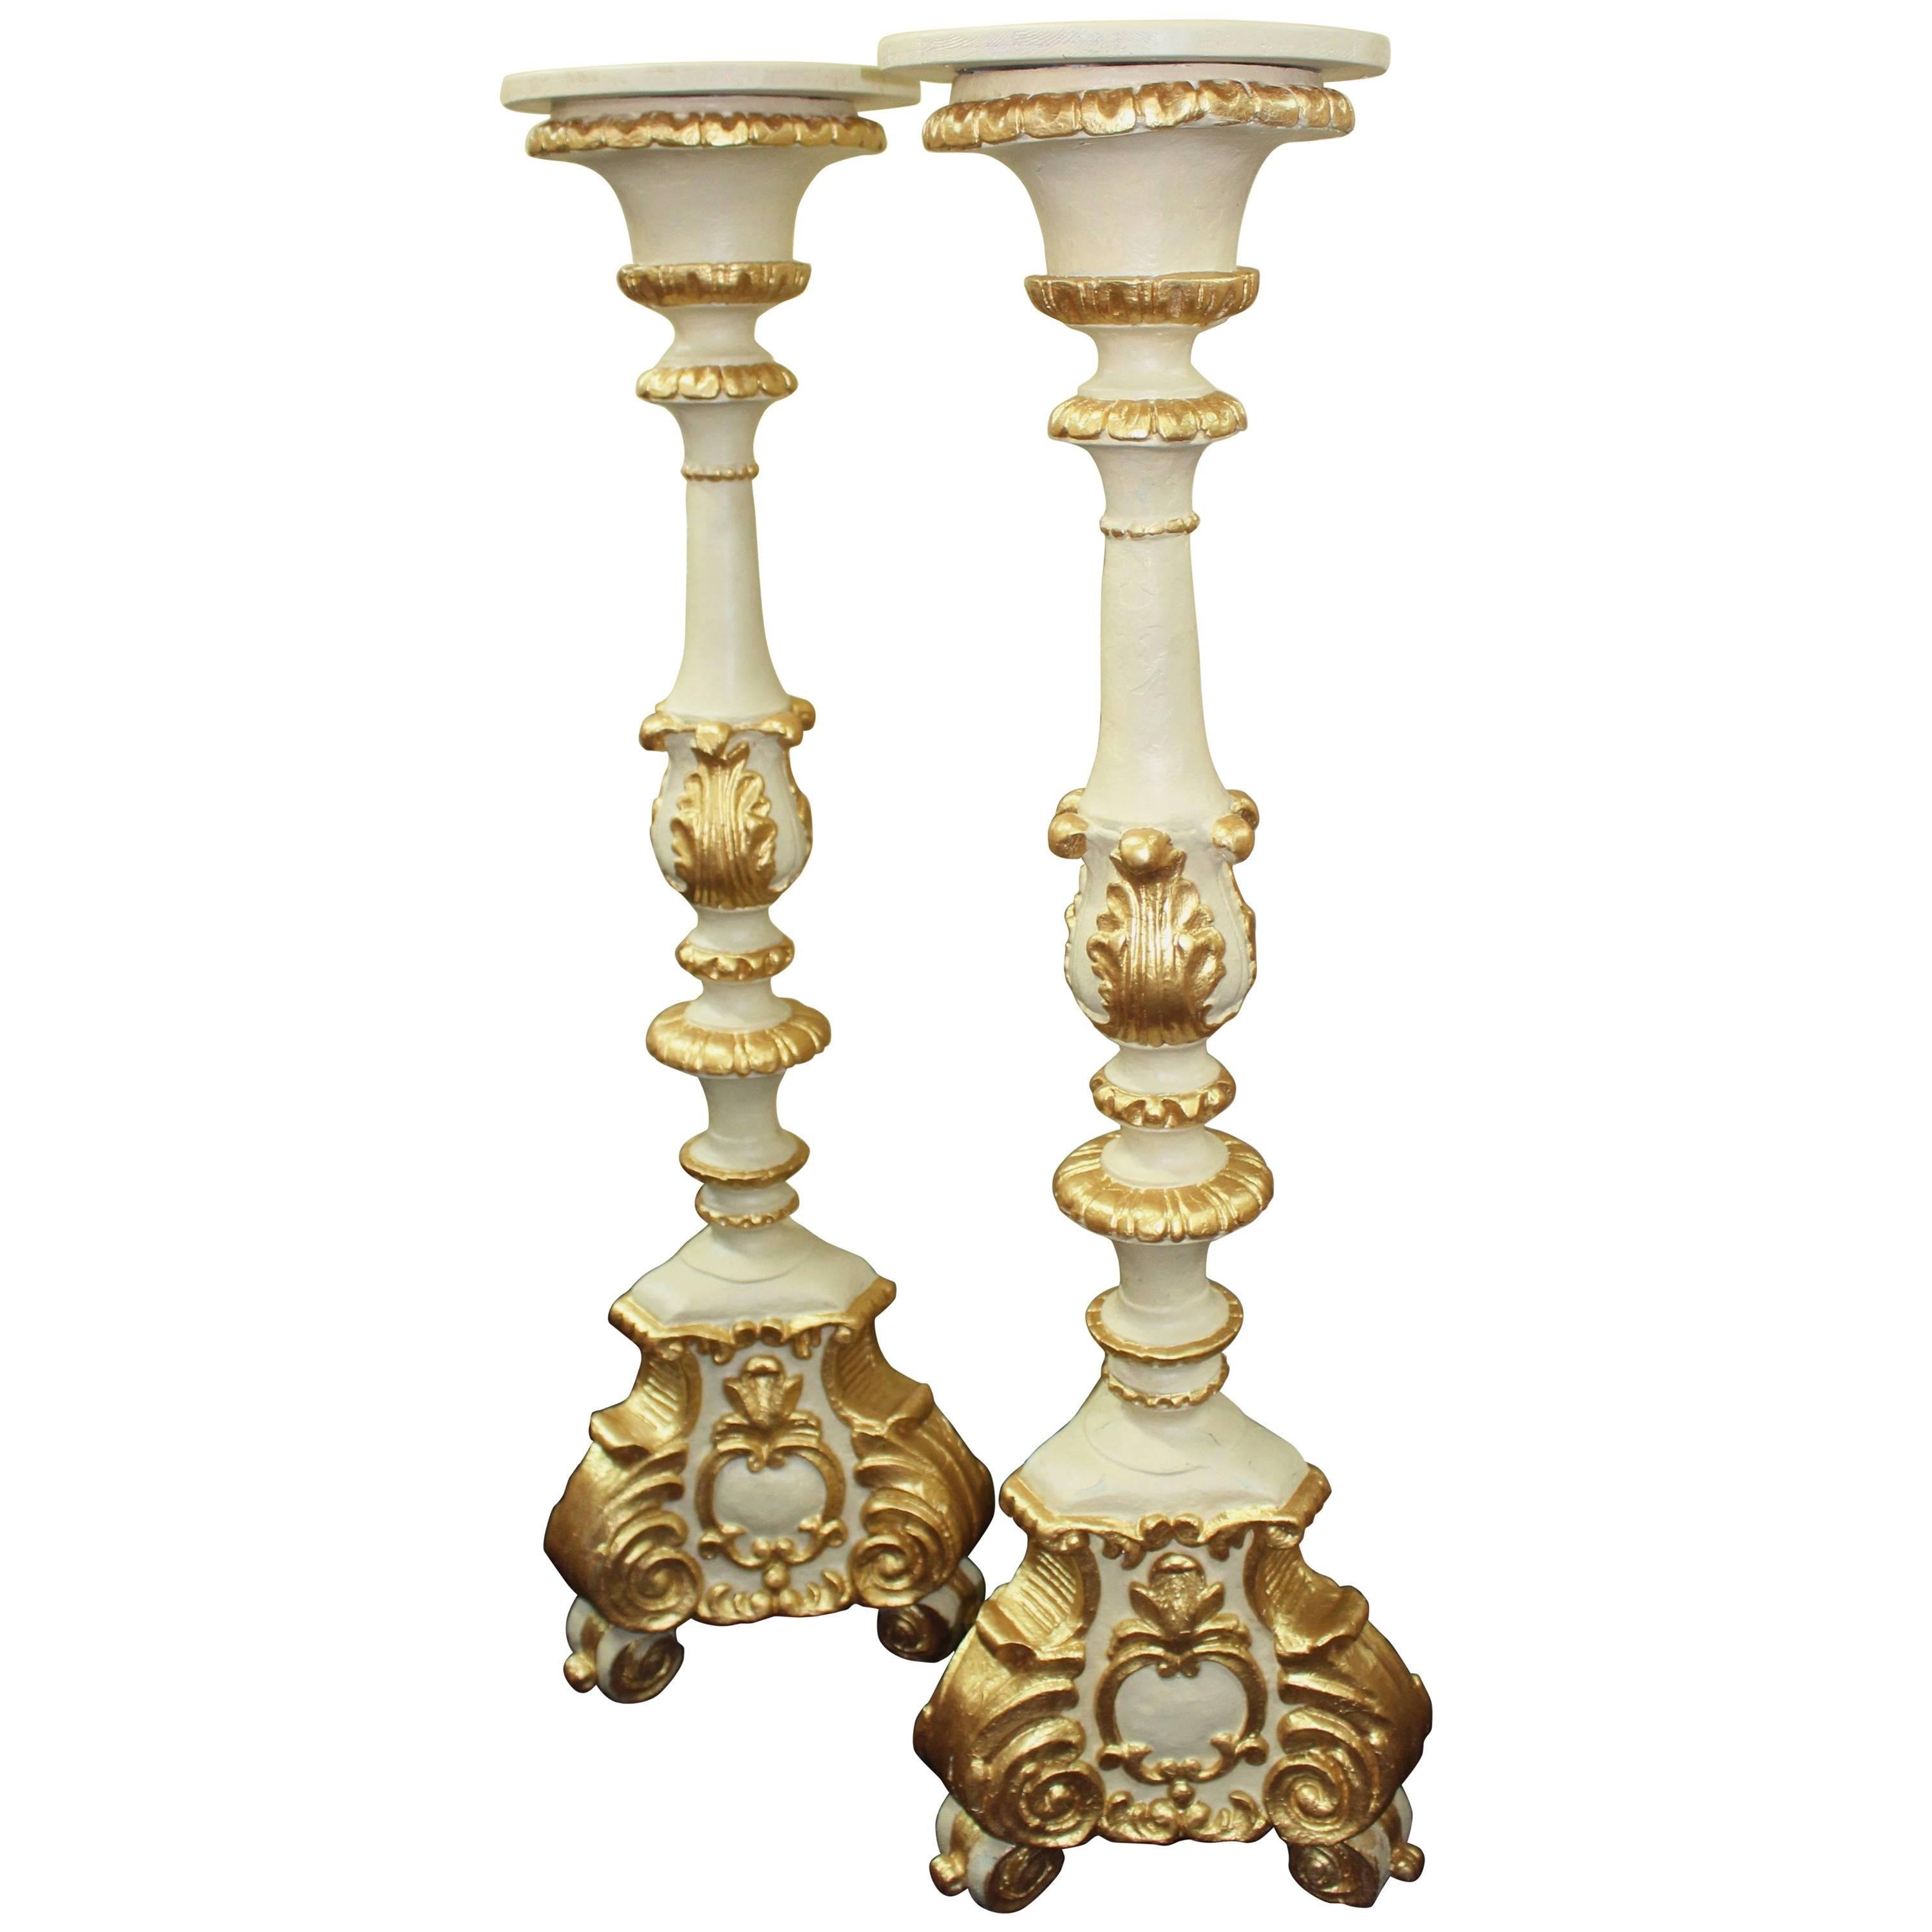 Pair of Ornate Cream & Gilt Decorative Pedestals